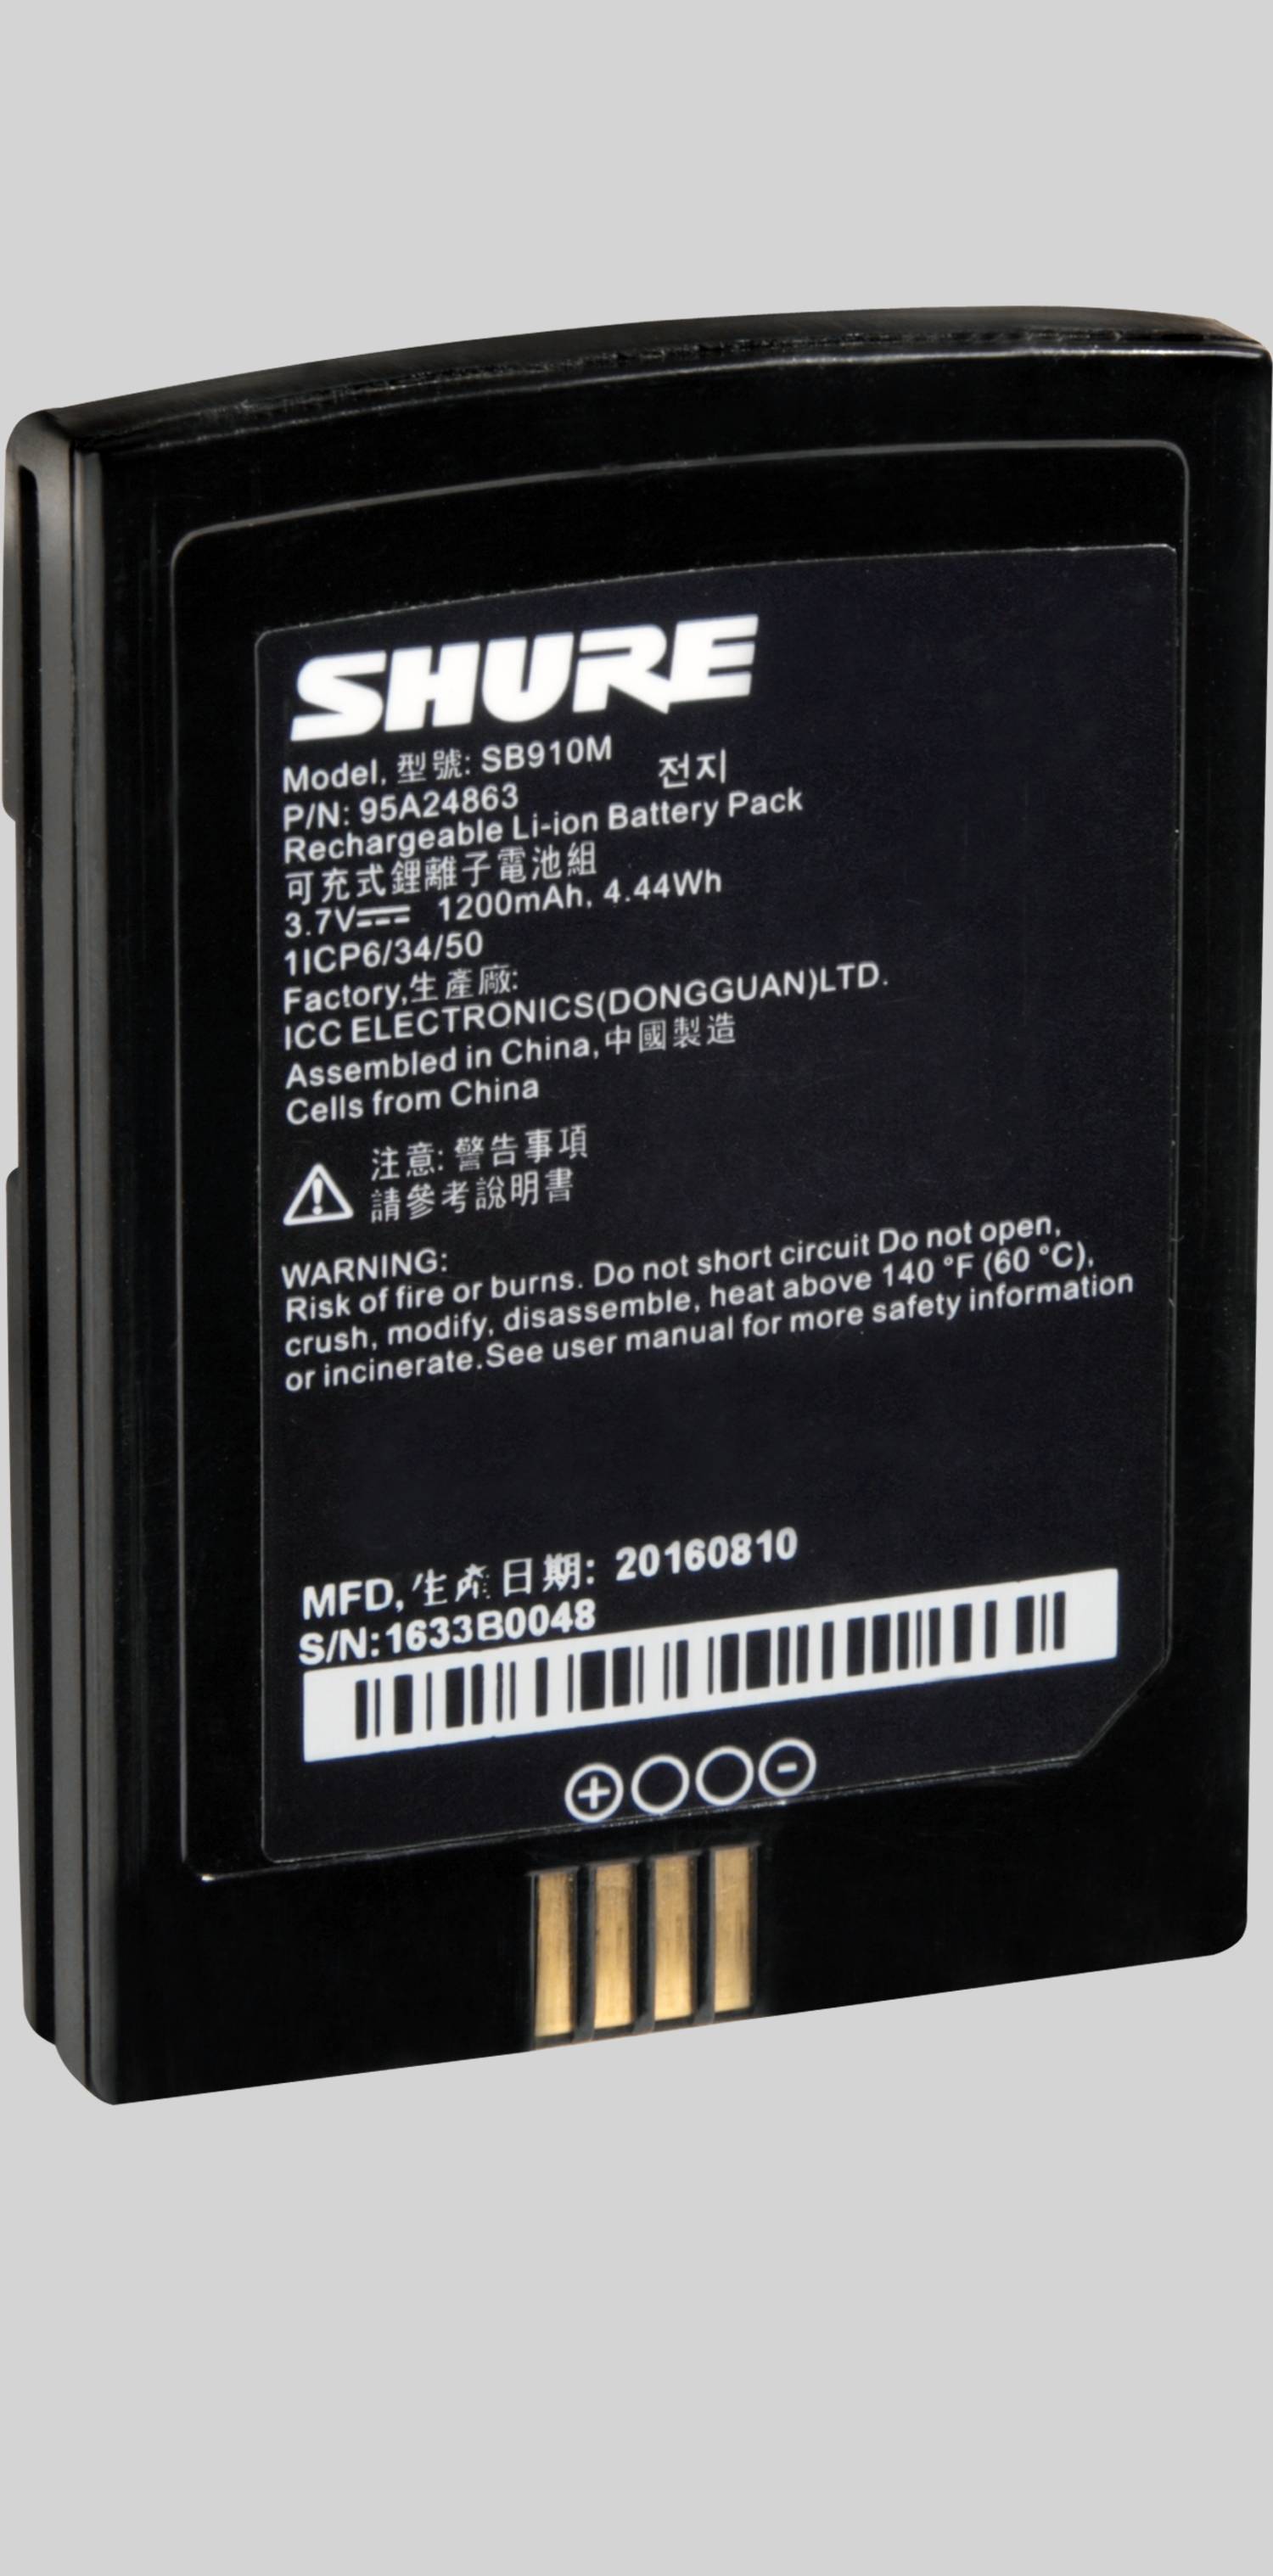 Shure (OEM) RM910 E